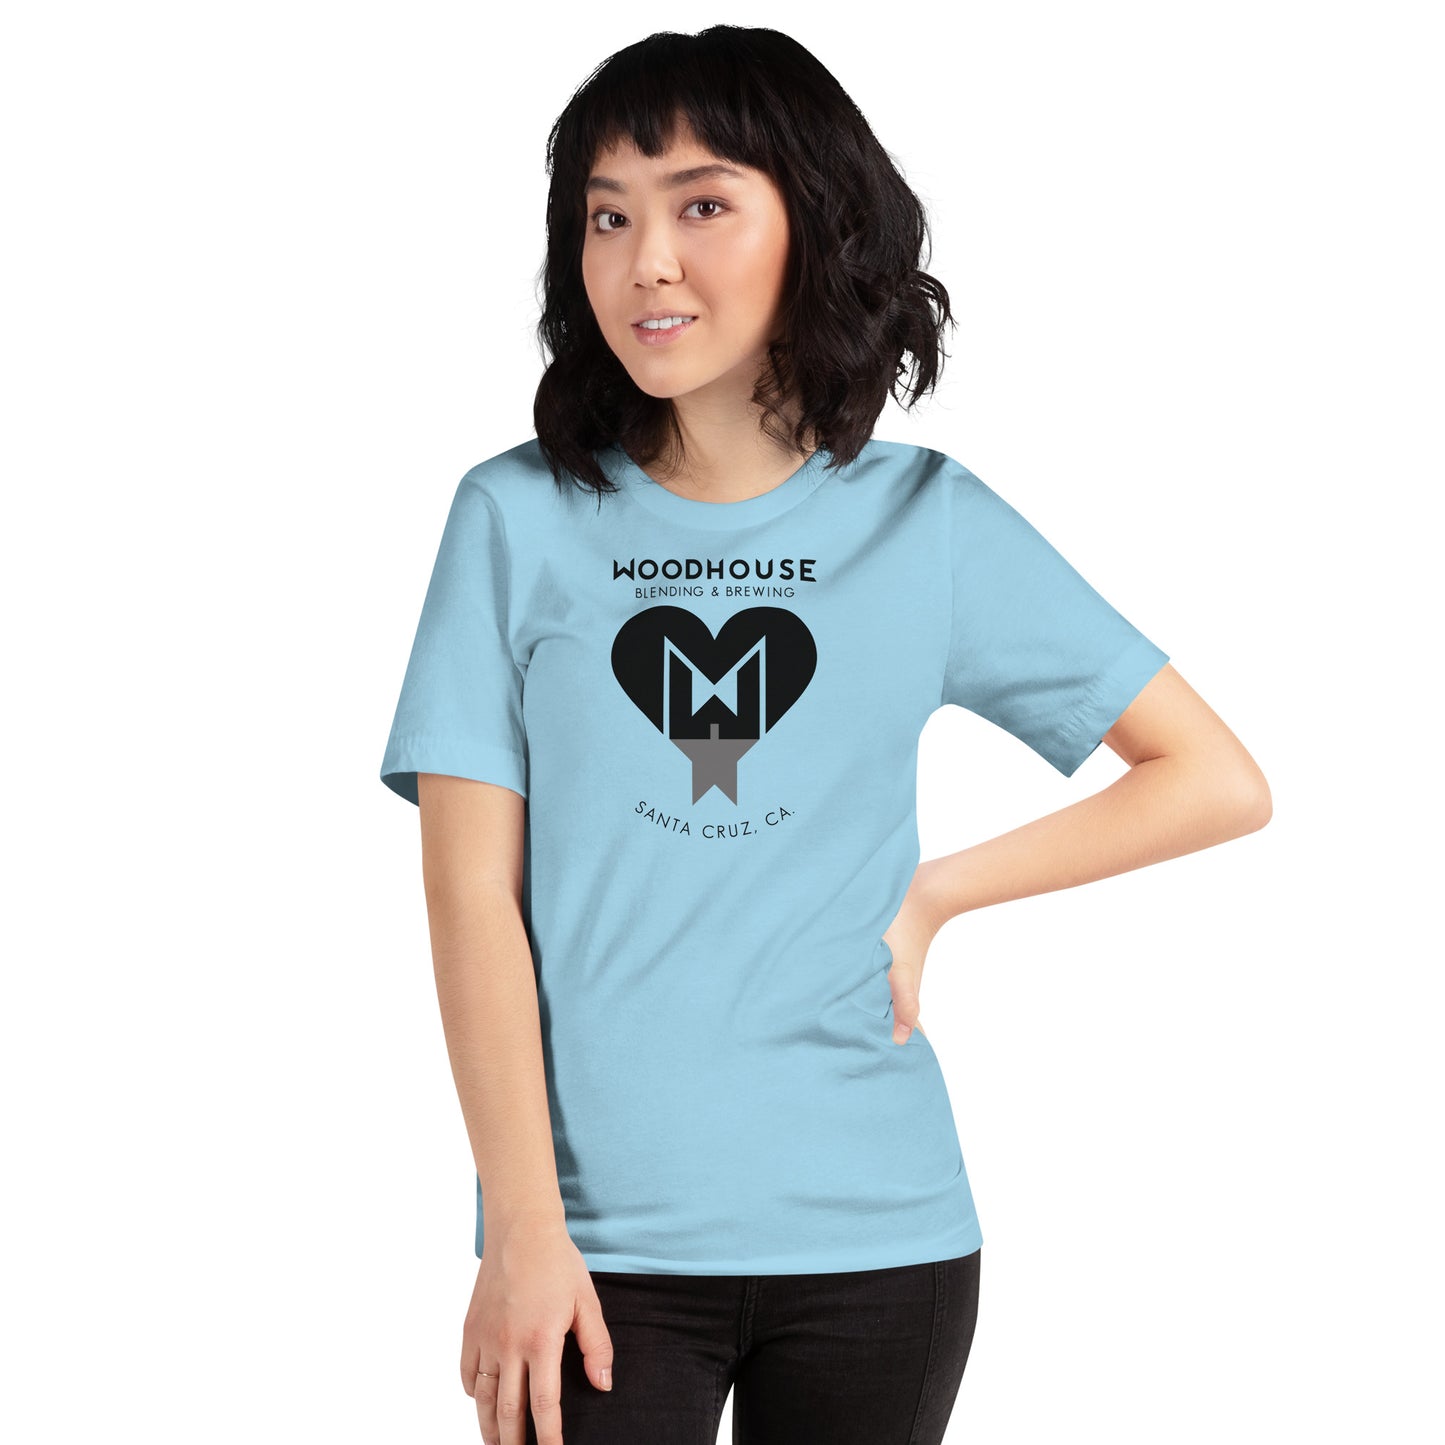 Share The Love, Unisex t-shirt